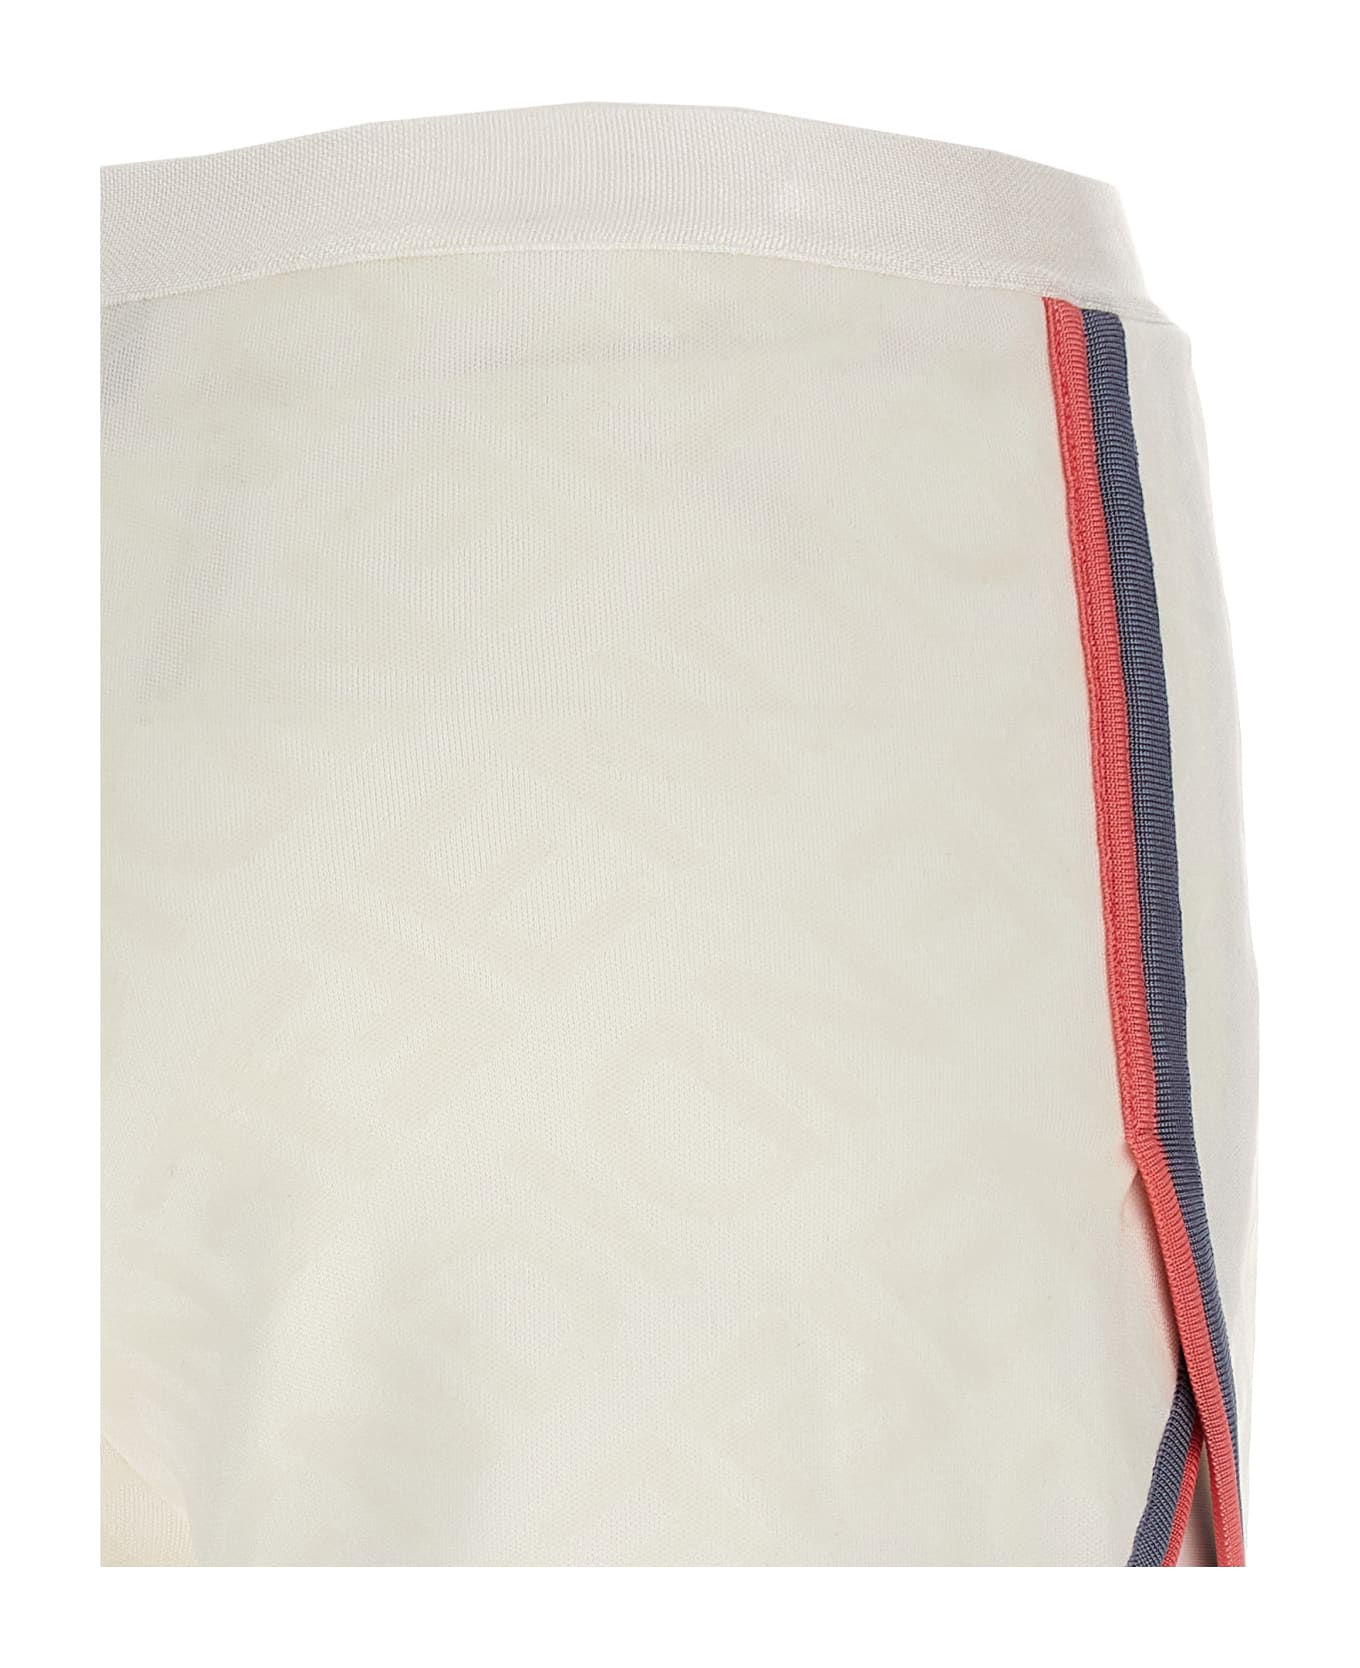 Fendi Mirror Effect Logo Shorts - White